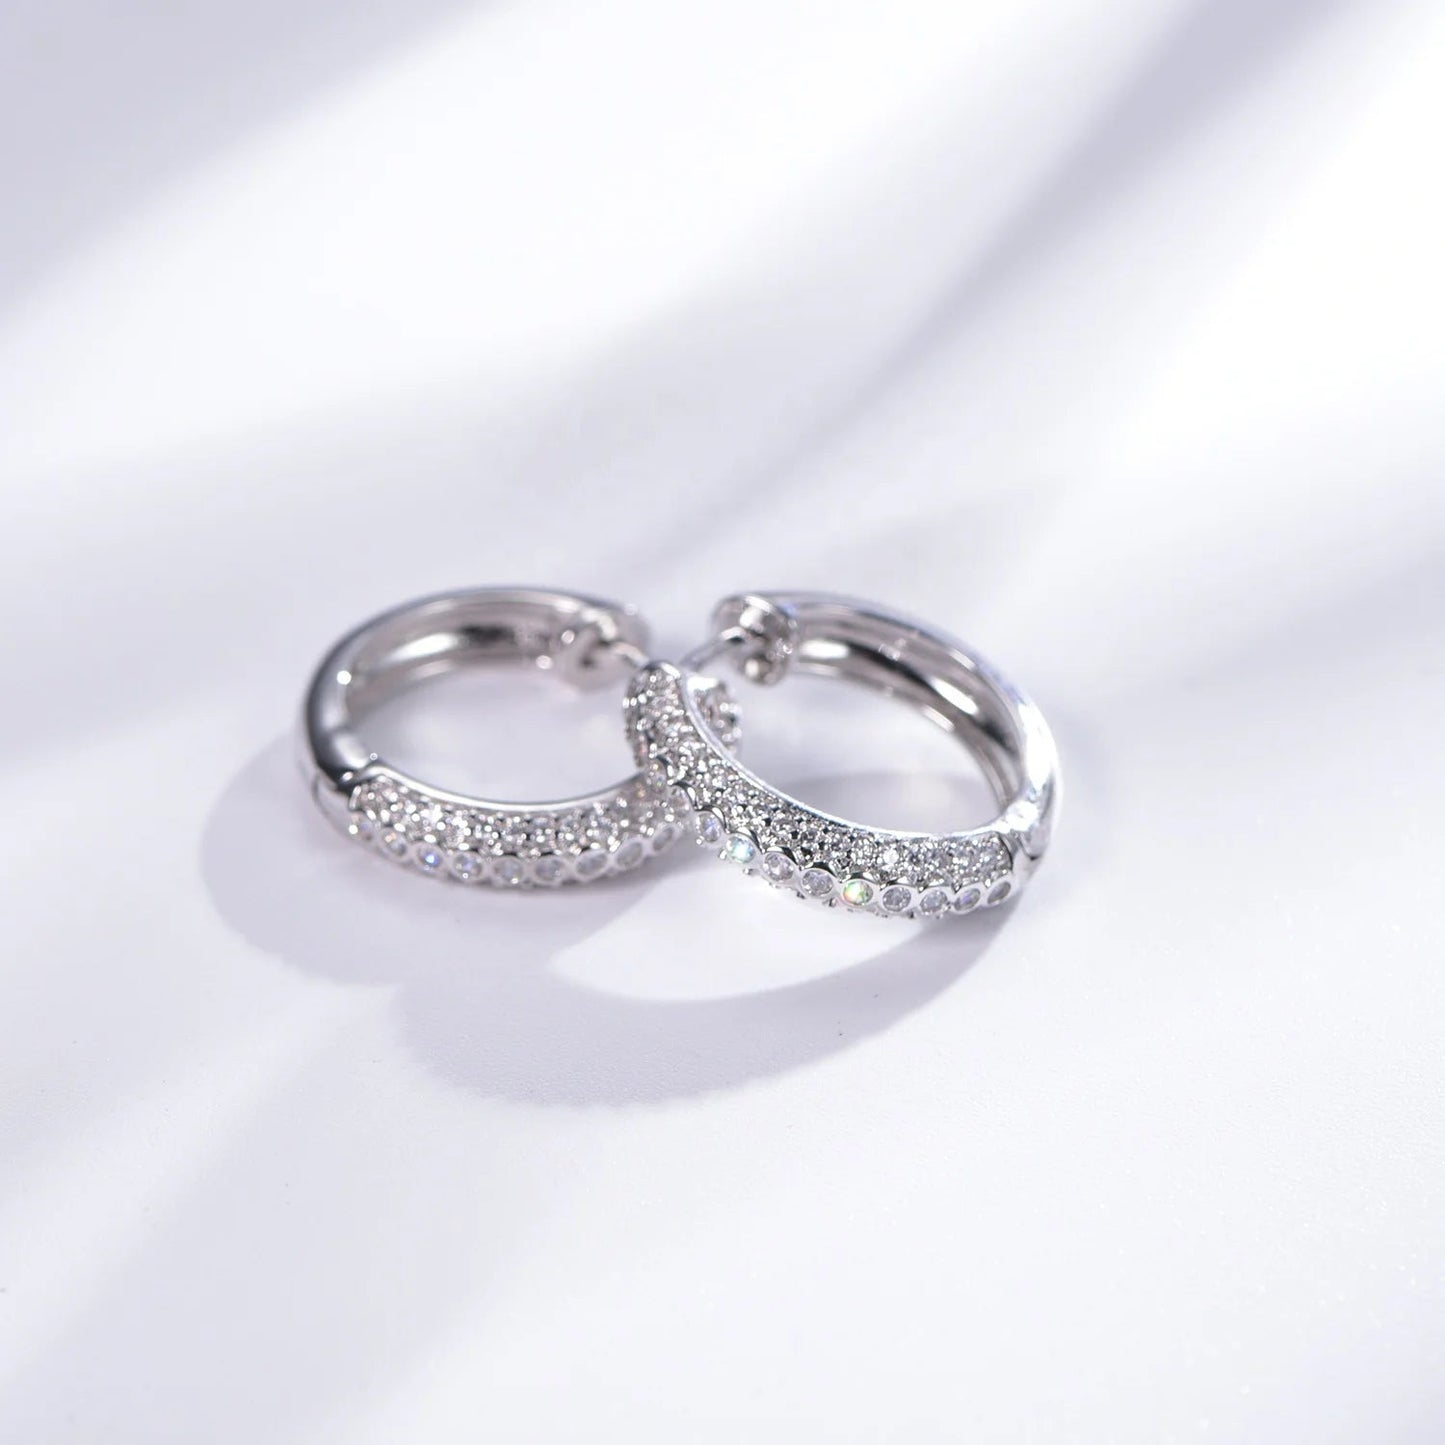 AAA CZ Sterling silver earrings 925 sterling silver gold vermeil plated hoop earrings Kirin Jewelry